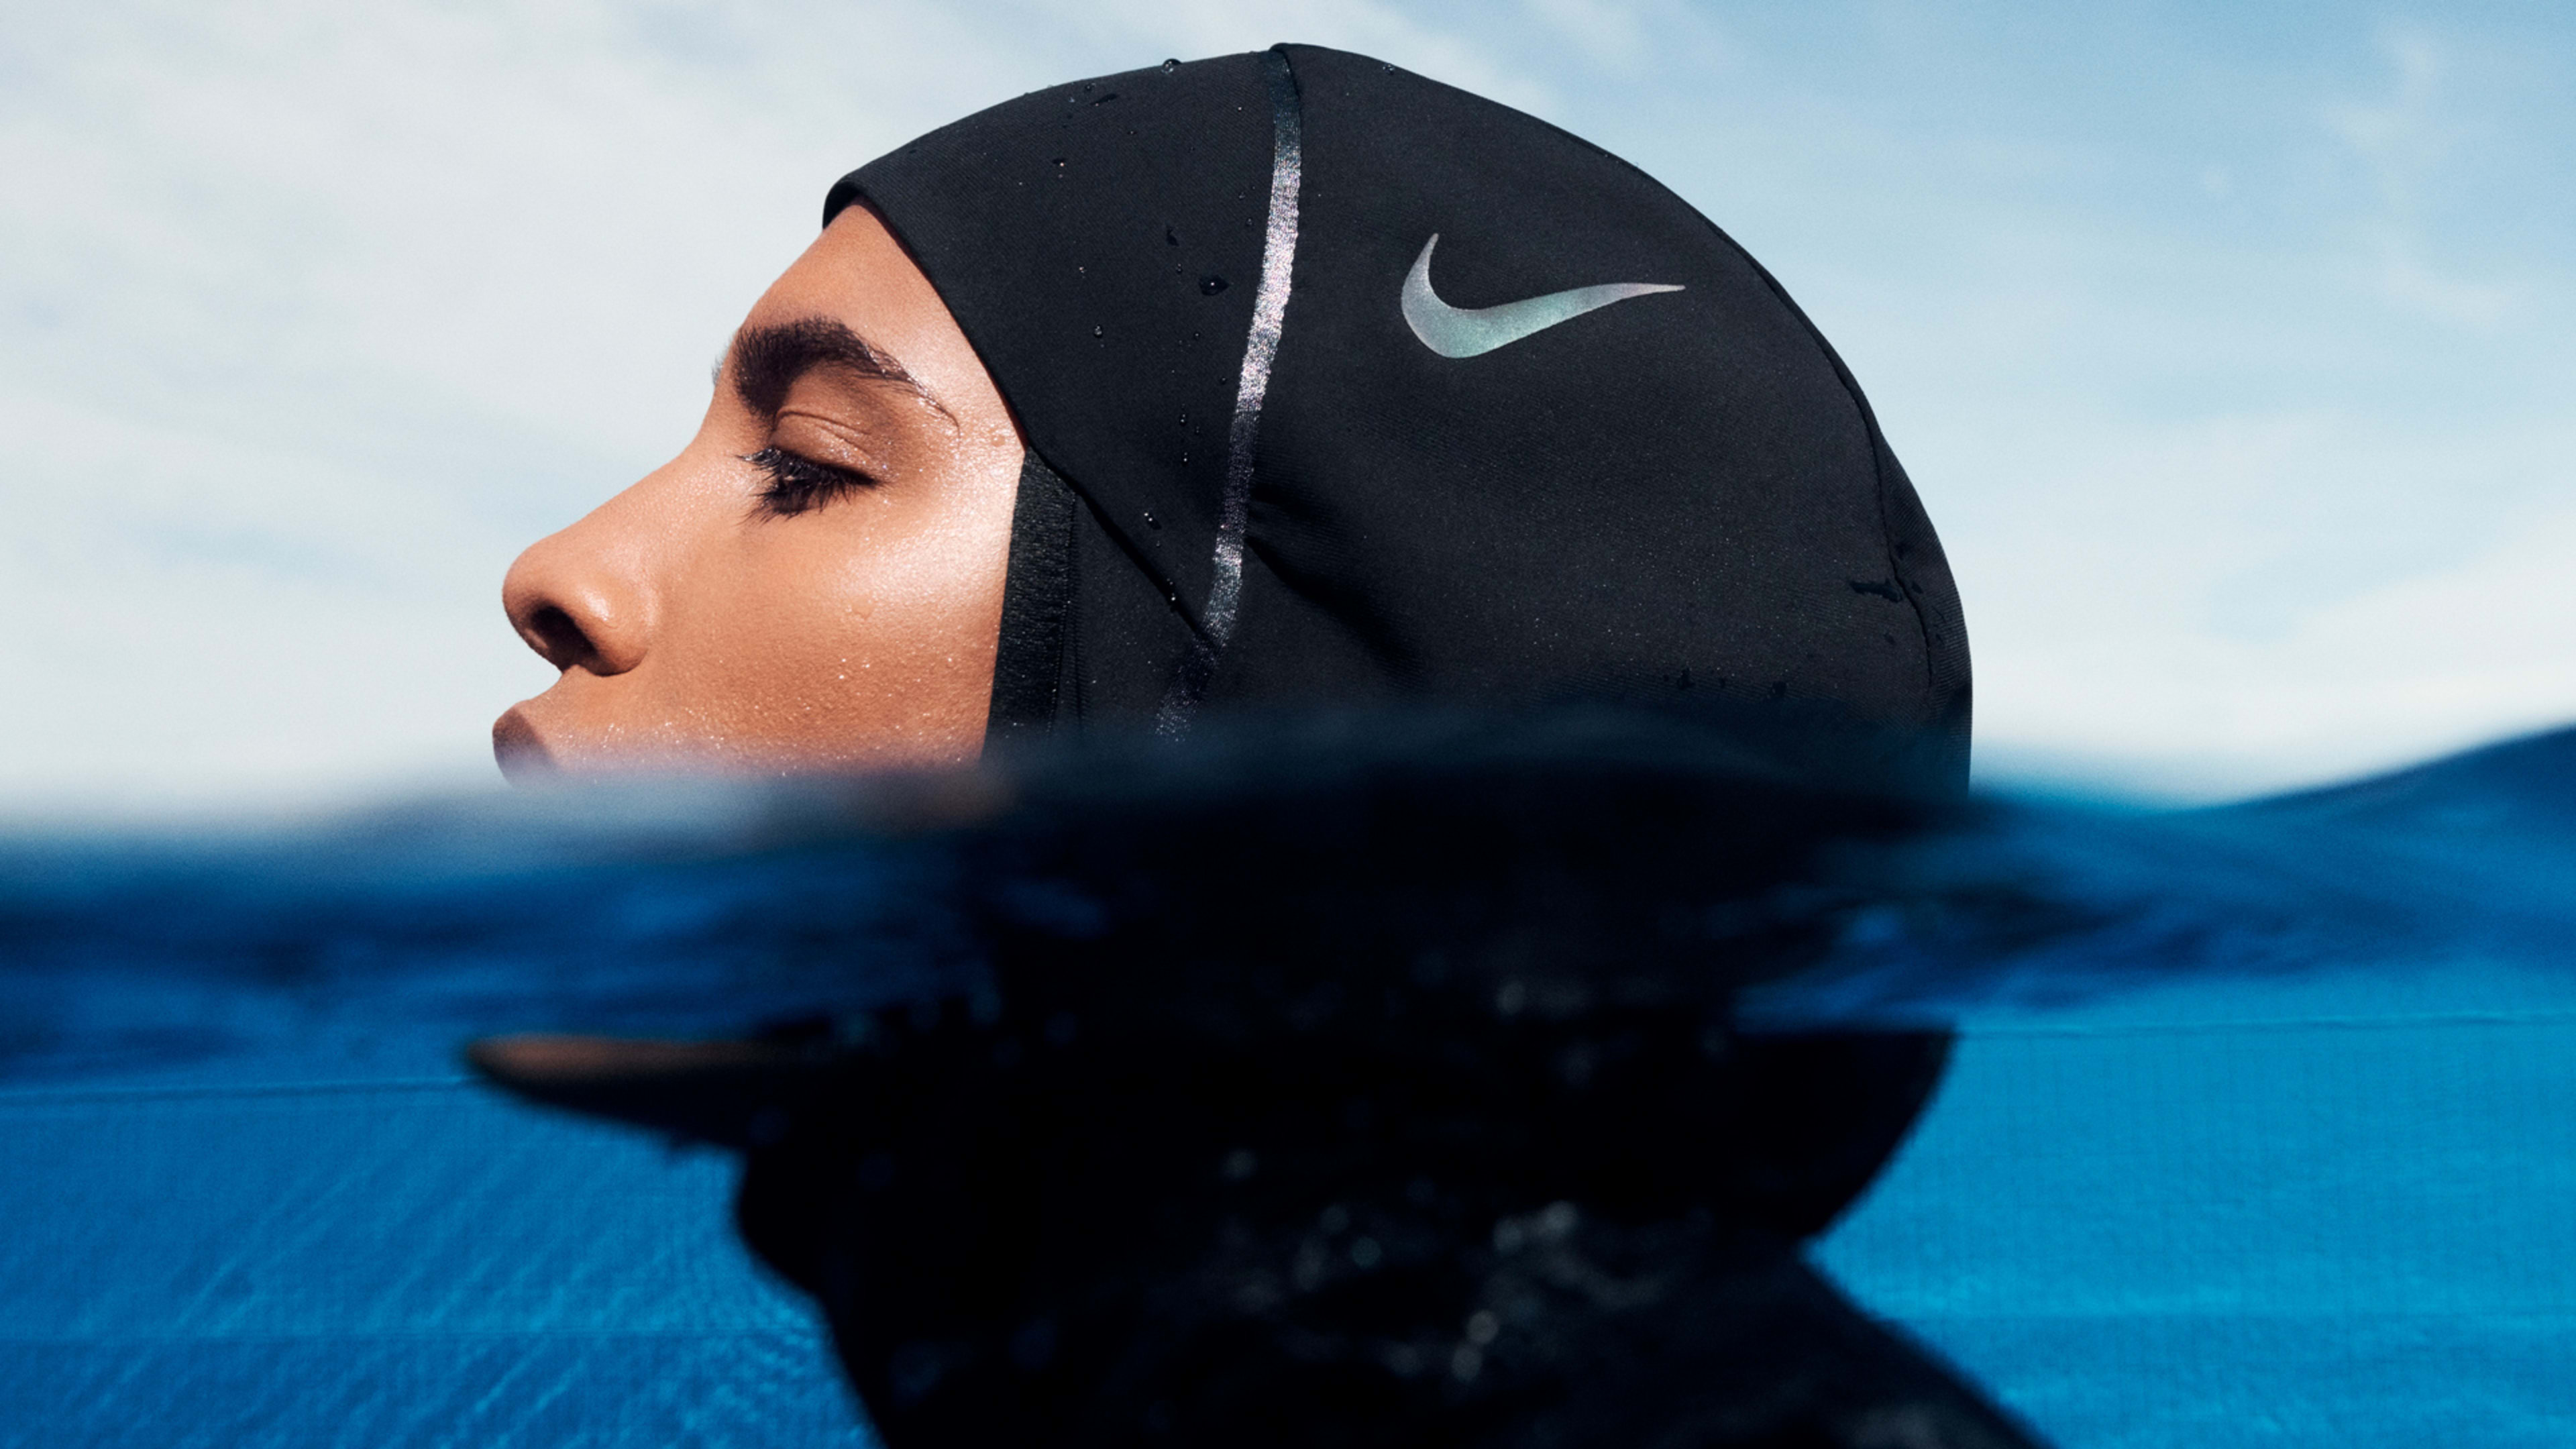 Nike debuts a groundbreaking new modesty swimsuit